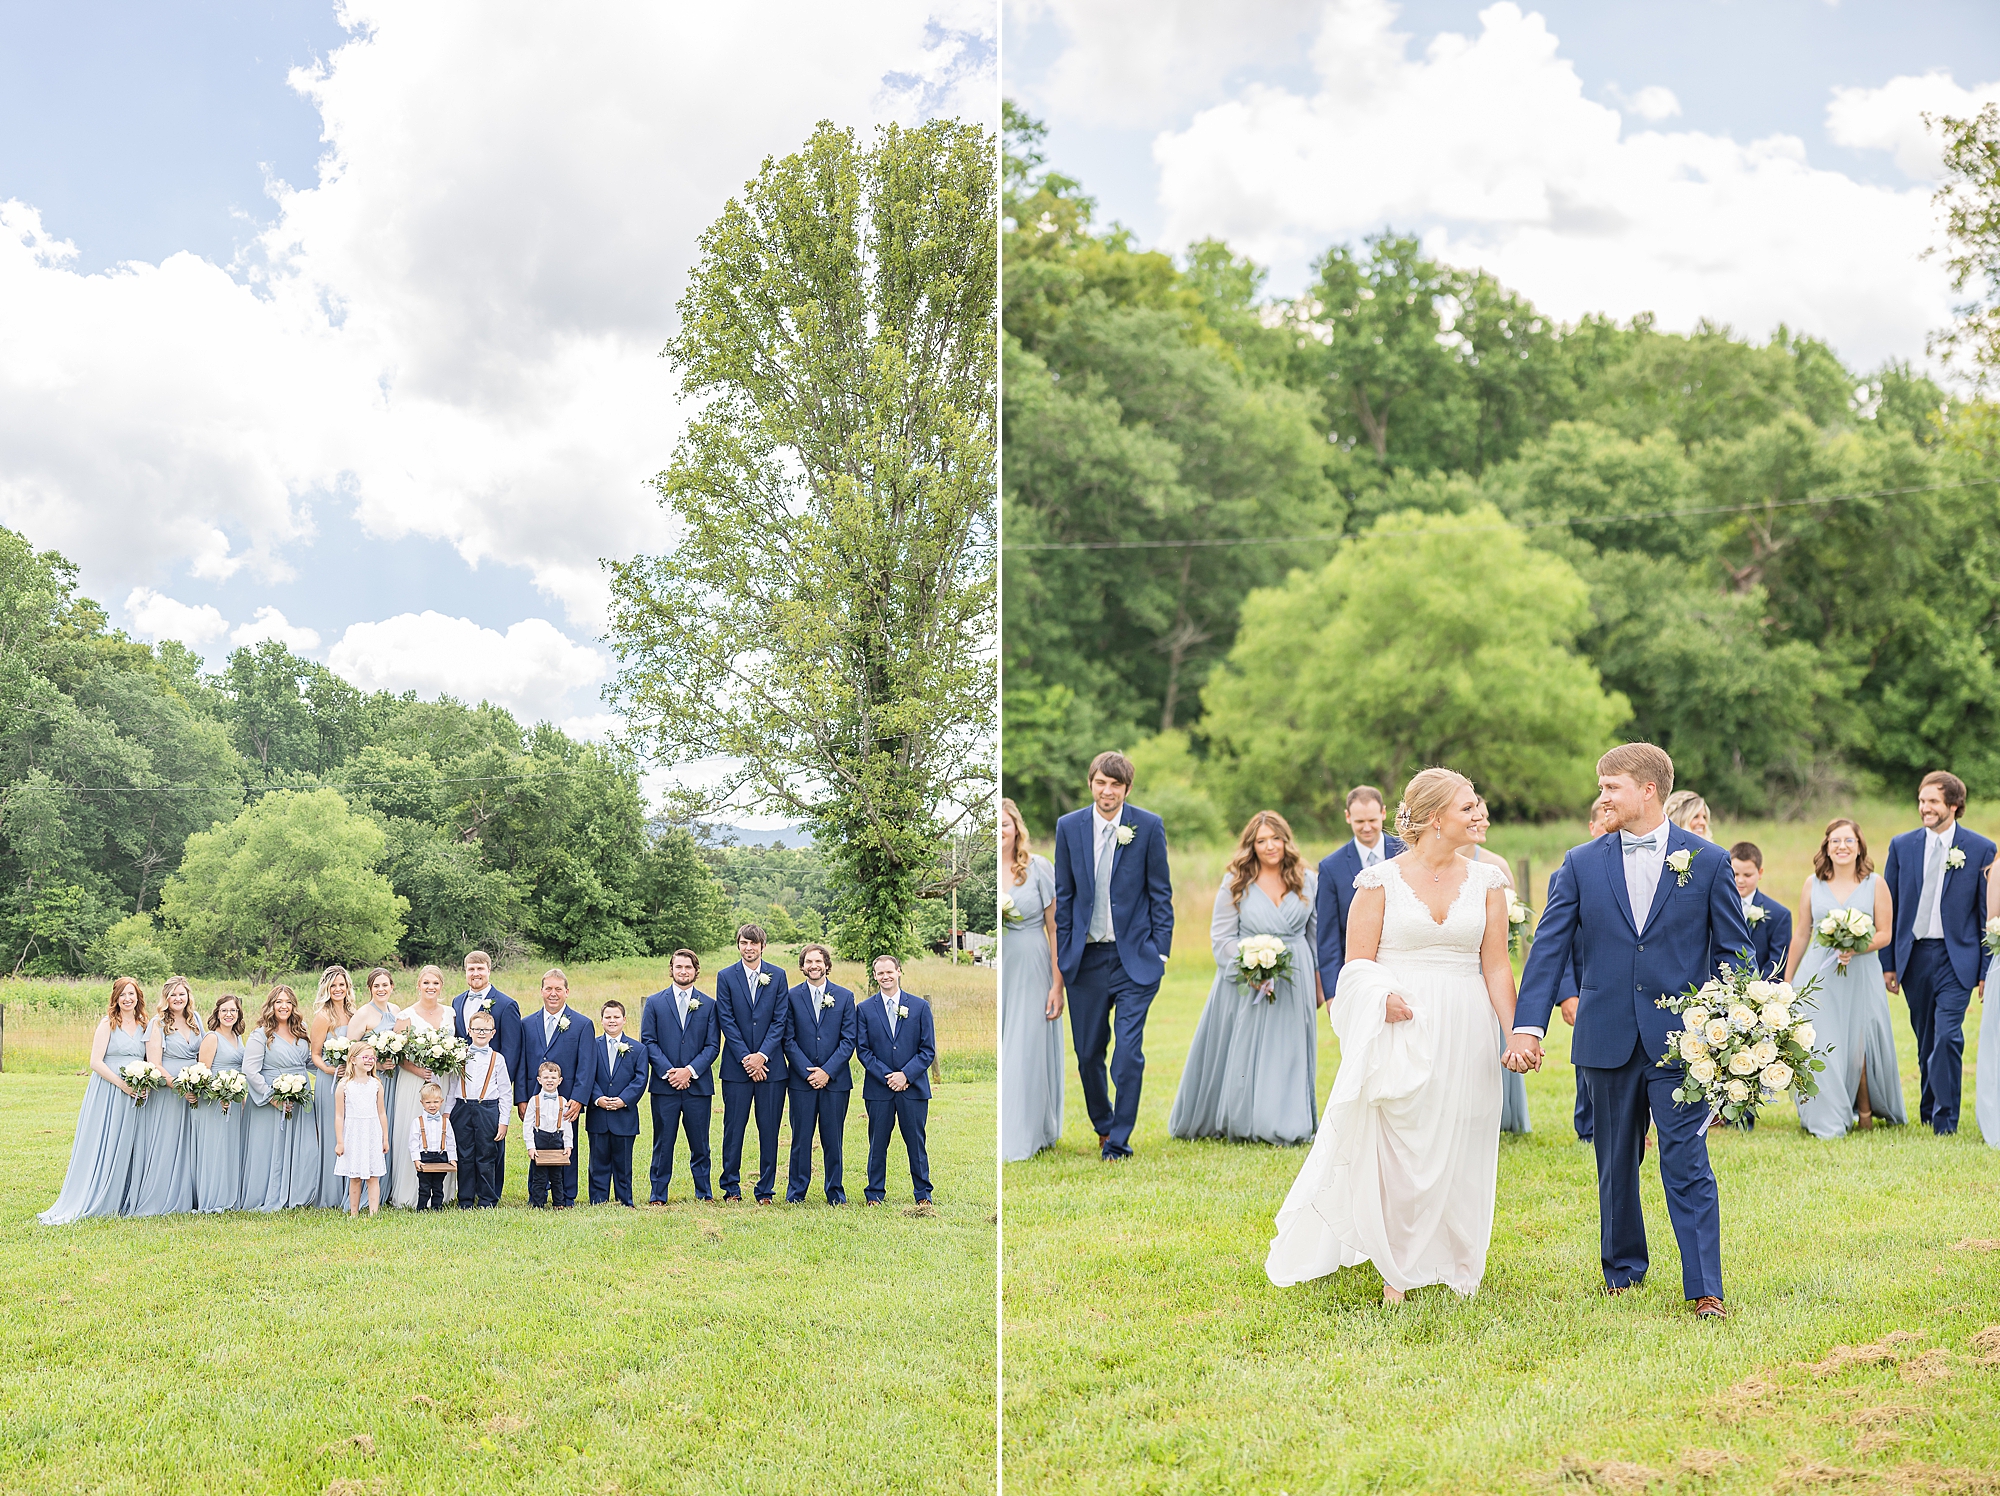 newlyweds walk through field with wedding party in blue attire